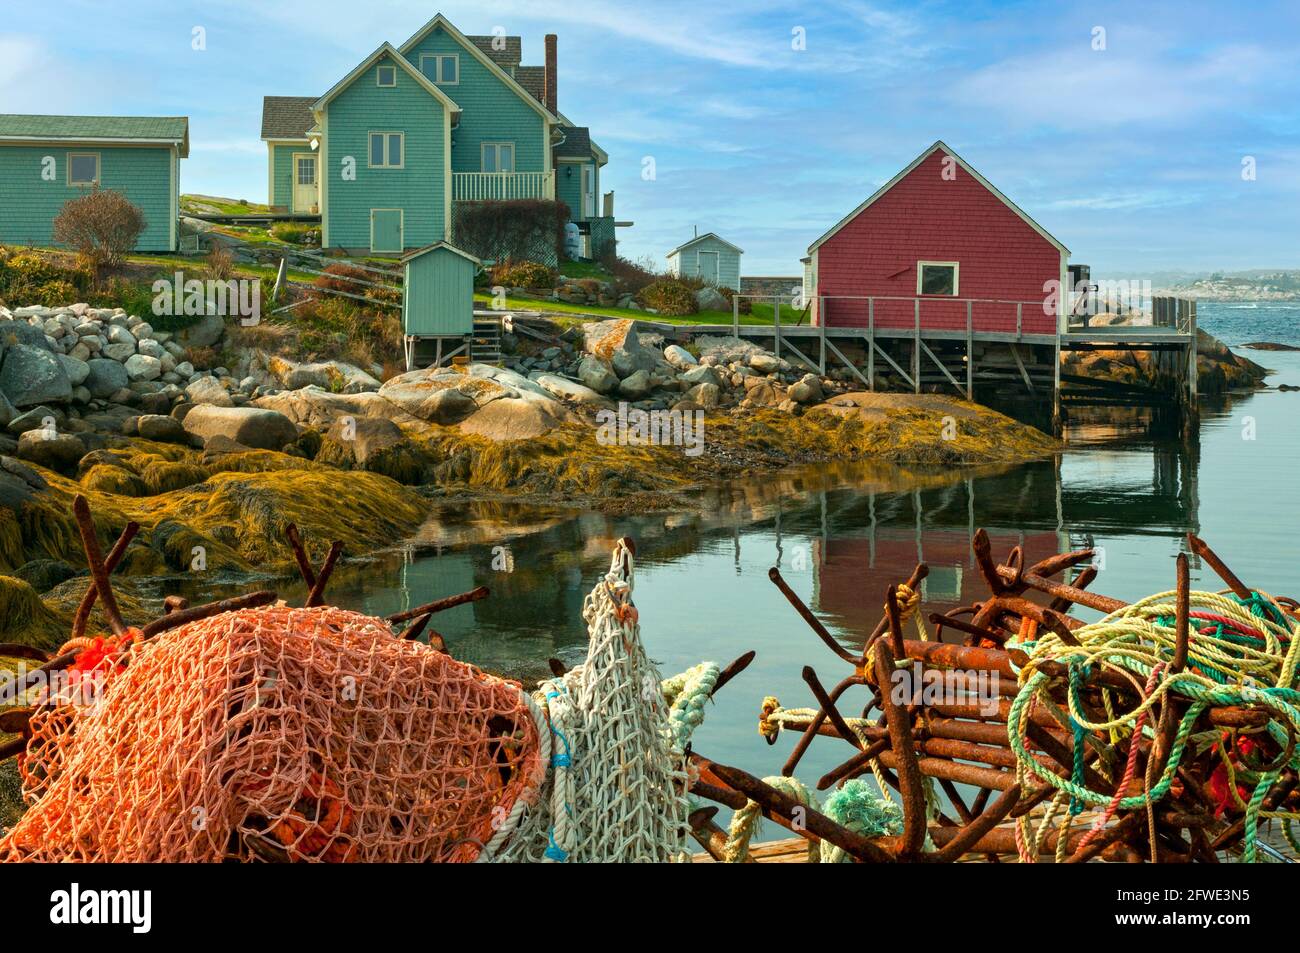 Hafen von Peggys Cove, Nova Scotia, Kanada Stockfoto